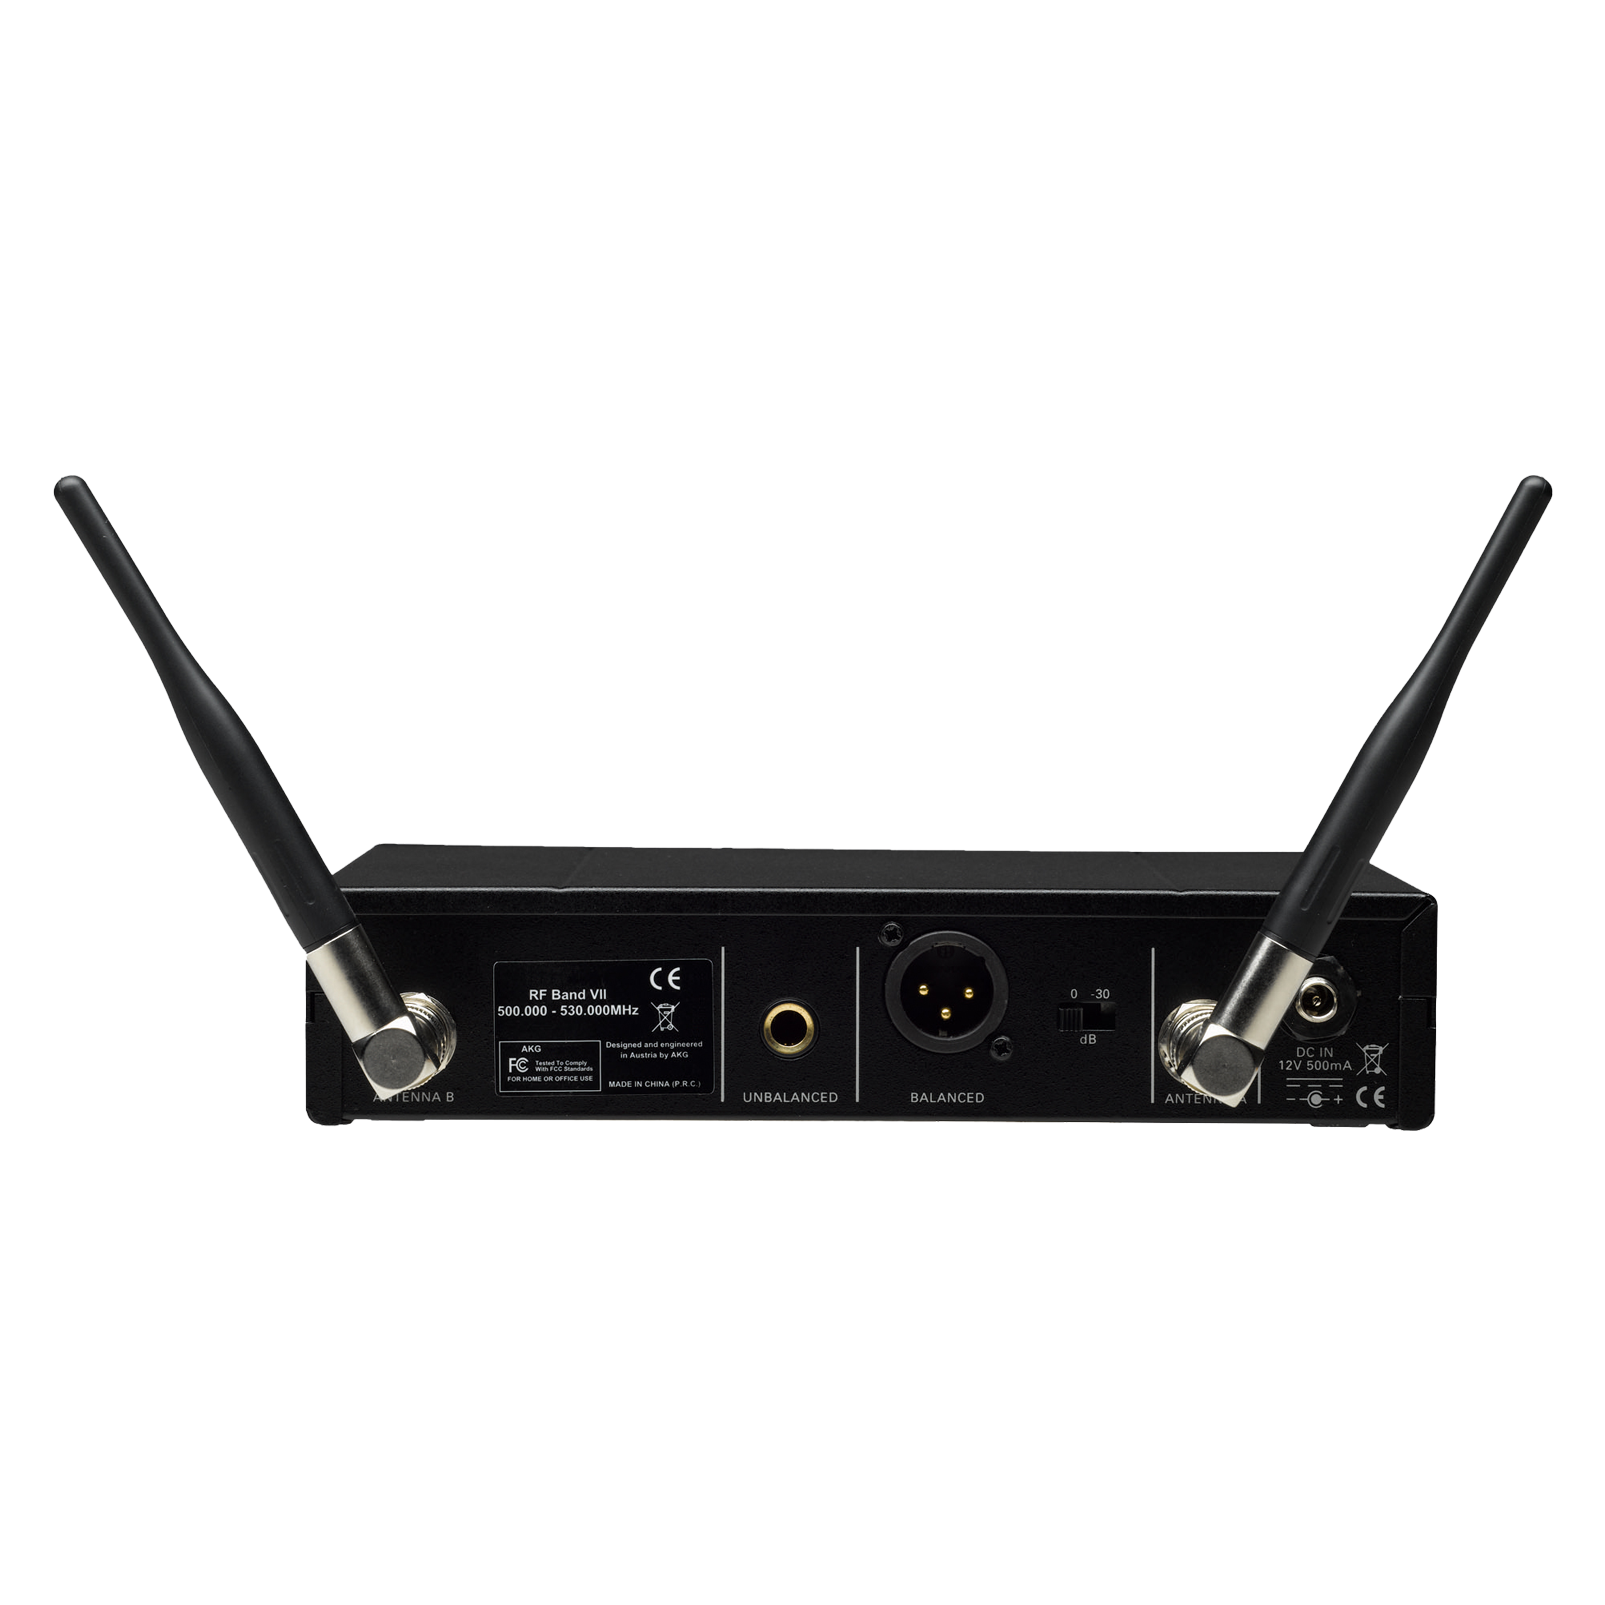 SR470 - Black - Professional wireless stationary receiver - Back